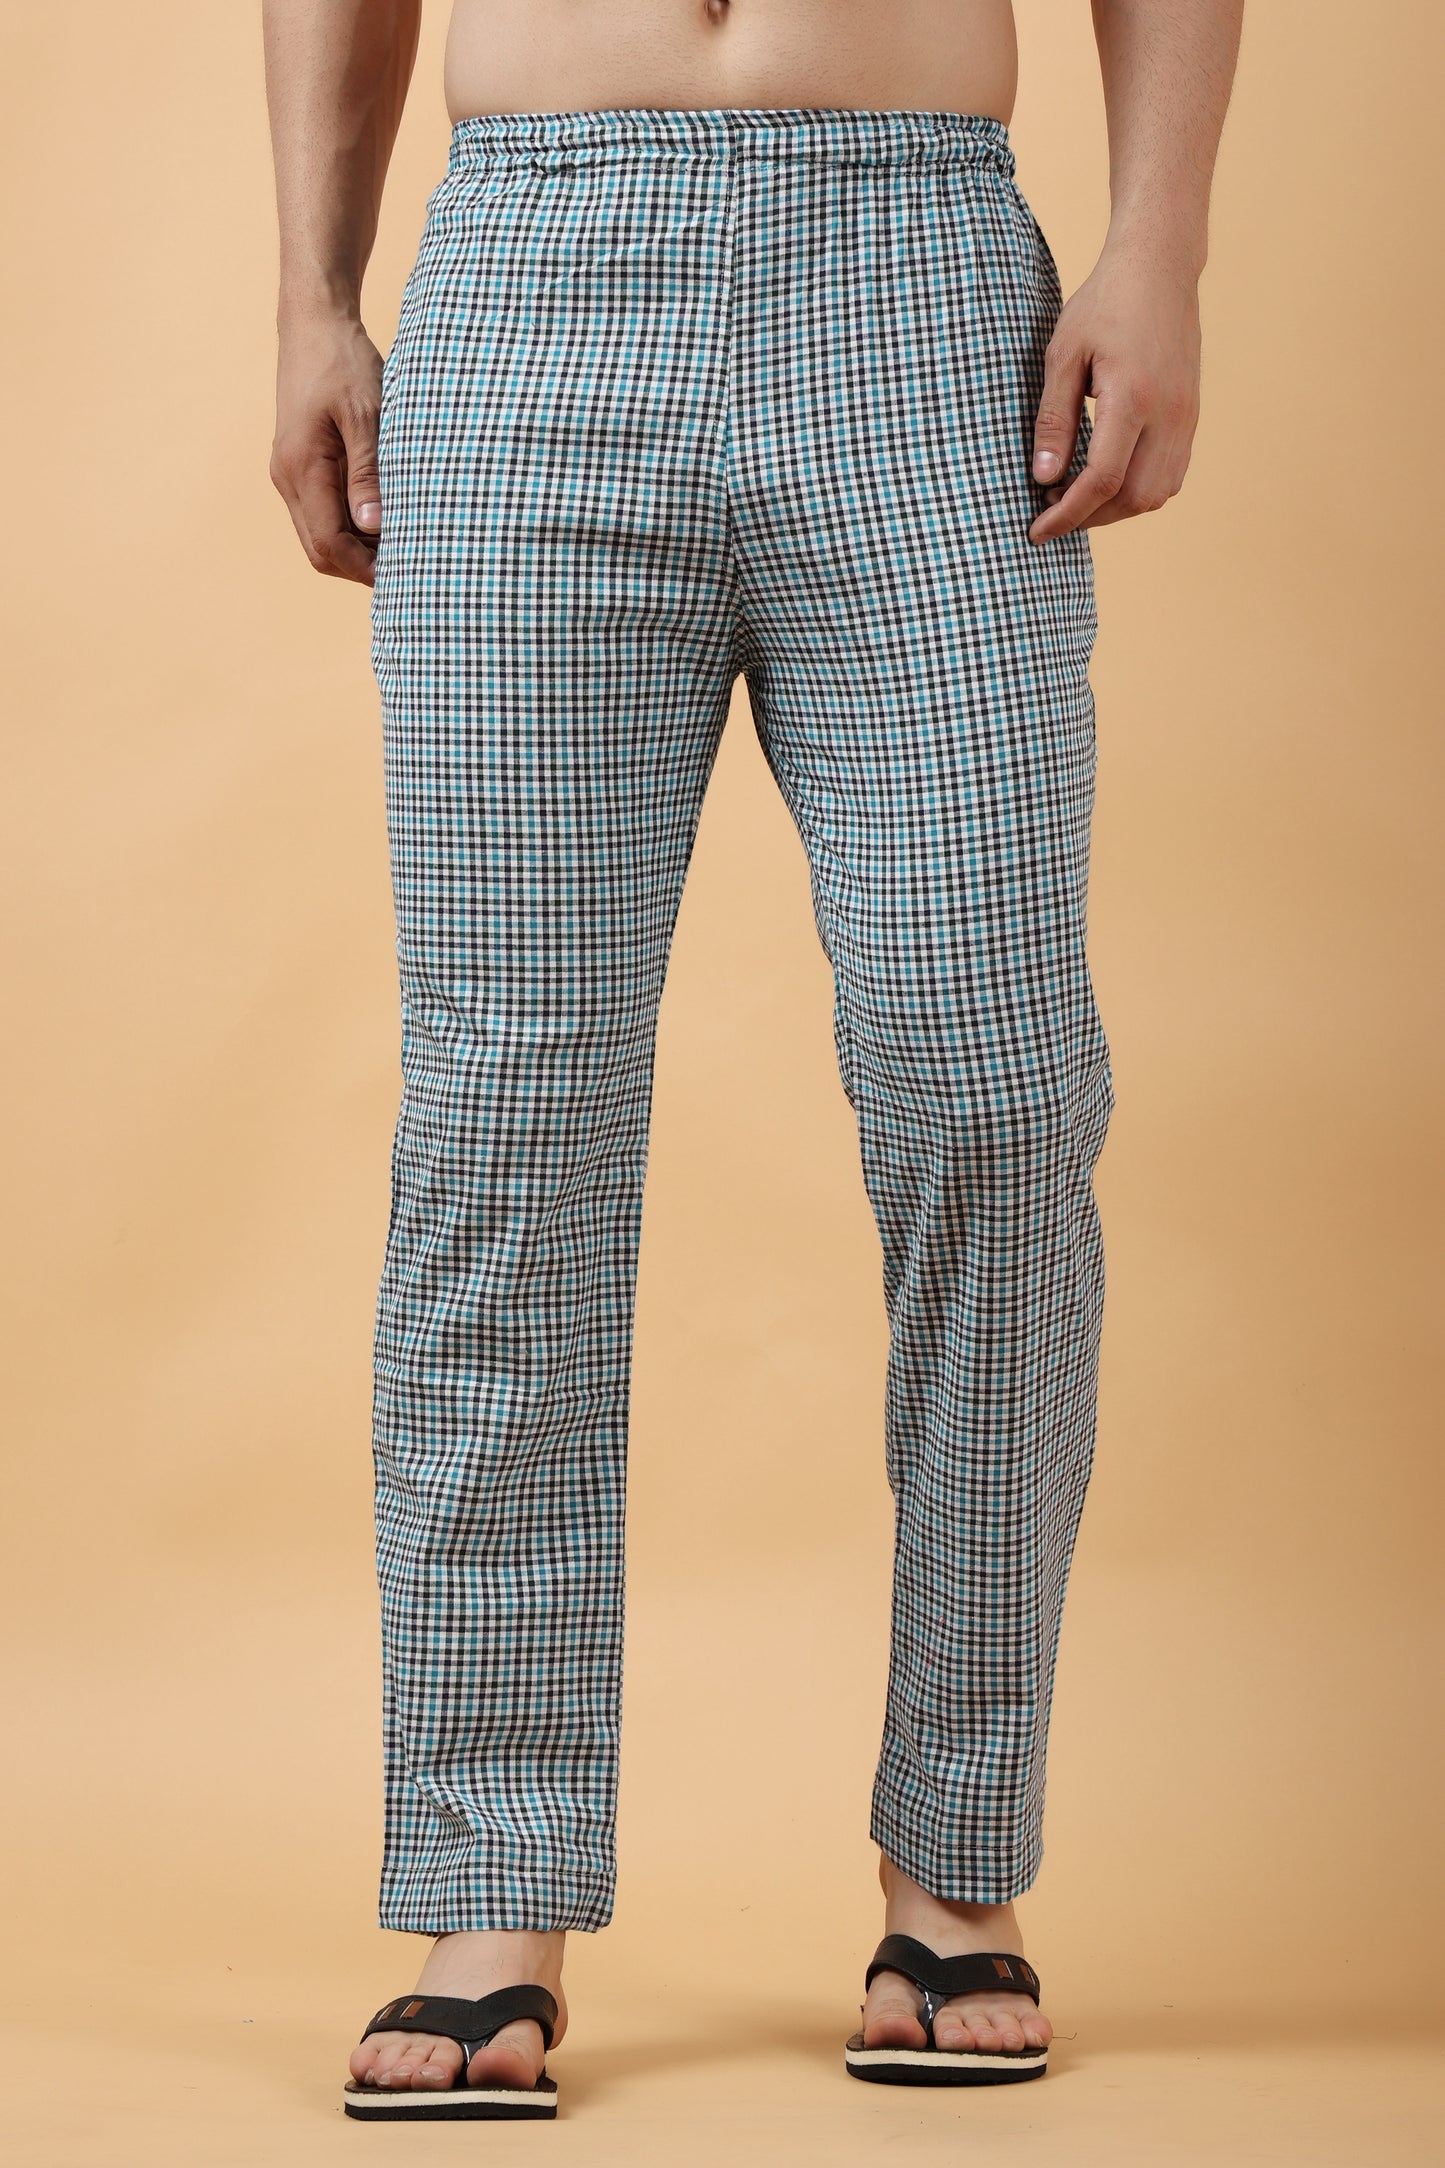 Cotton Pyjamas For Men